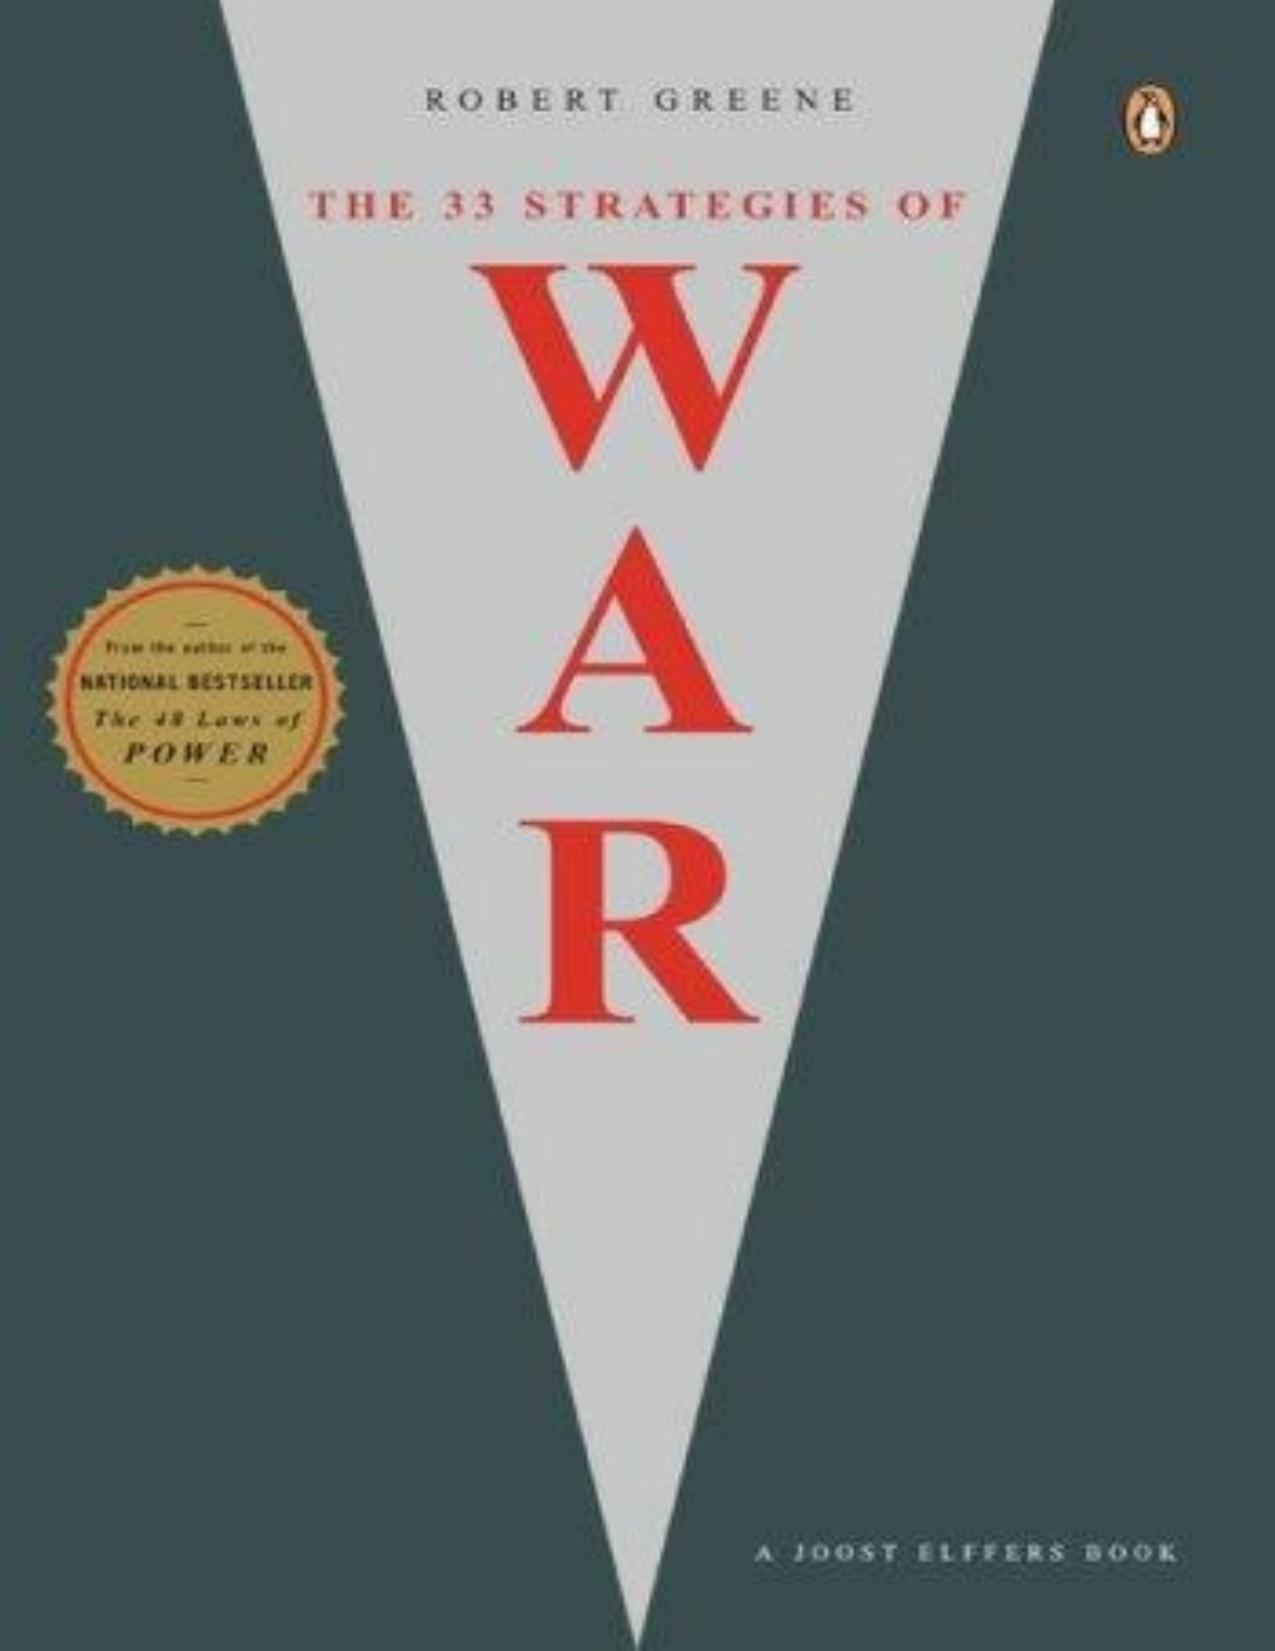 The 33 Strategies of War - PDFDrive.com by Robert Greene